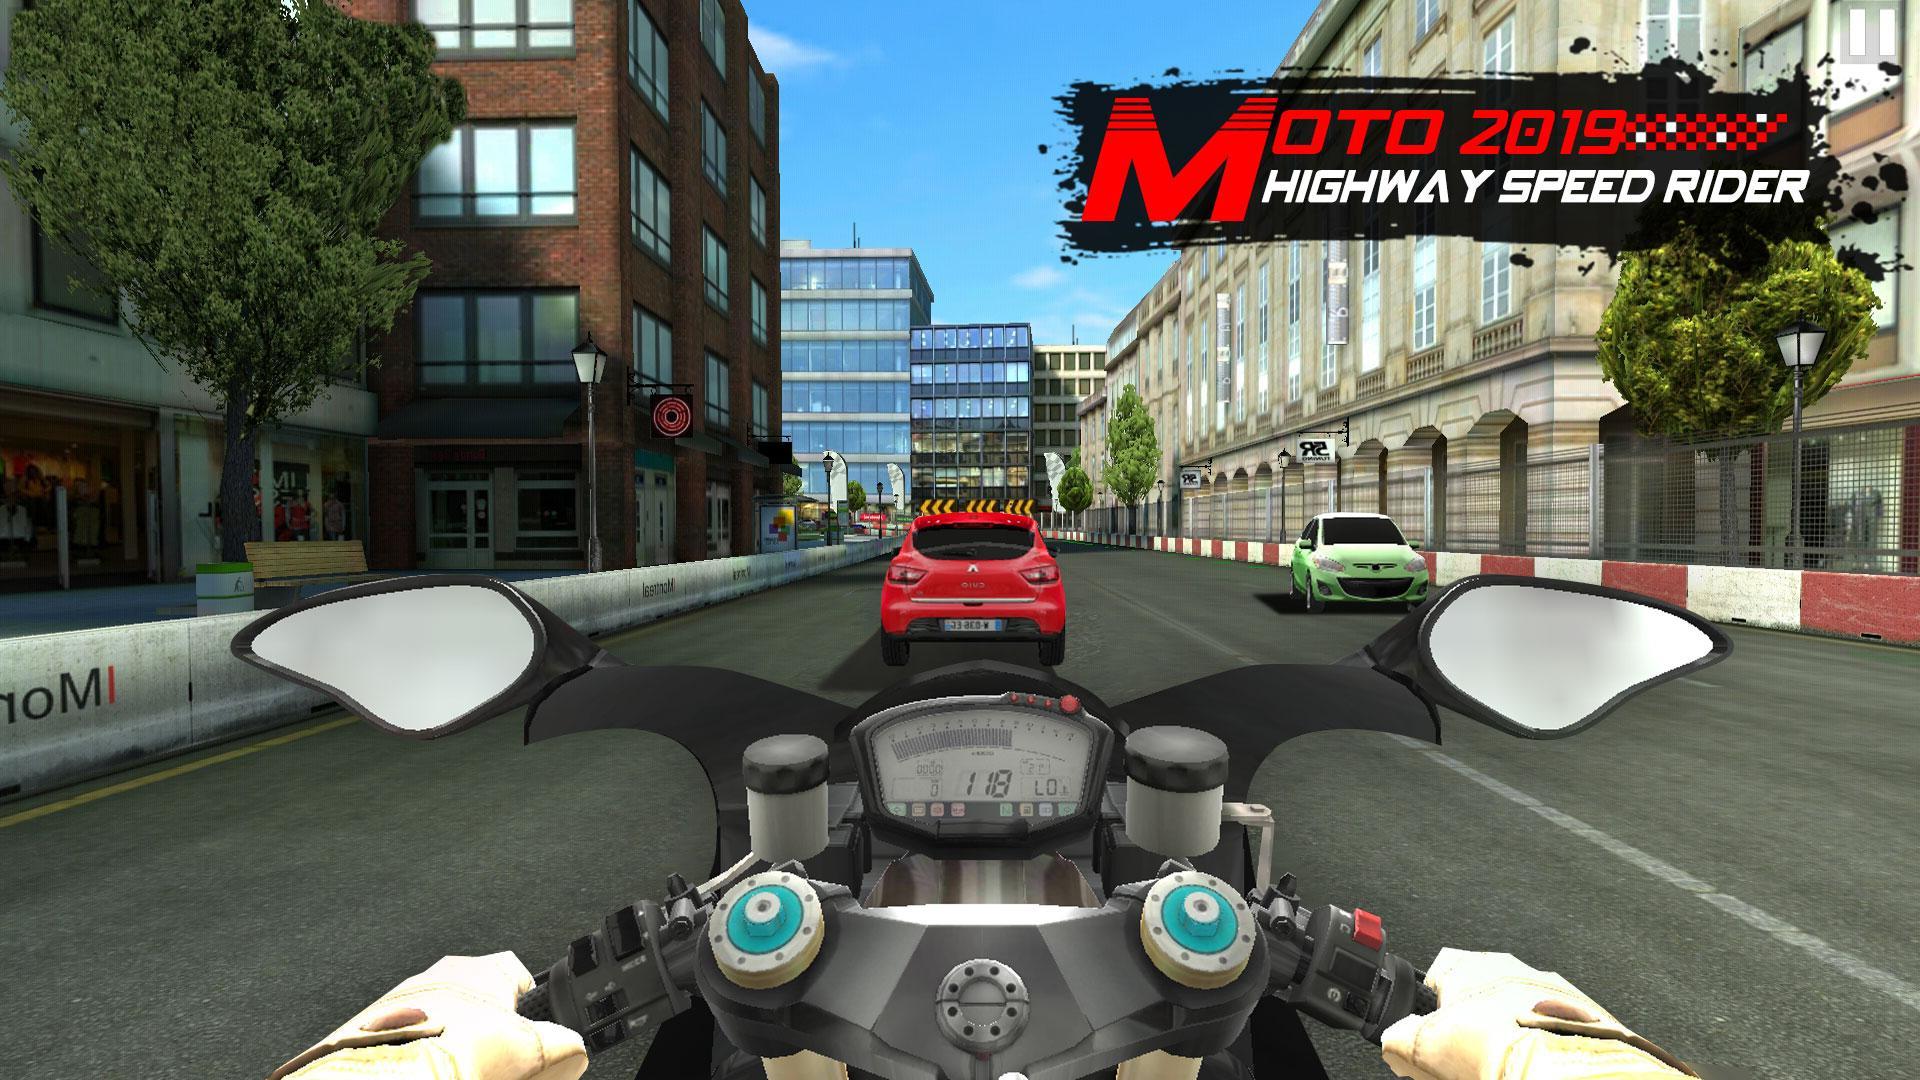 Moto 2019 - Highway Speed Rider screenshot game